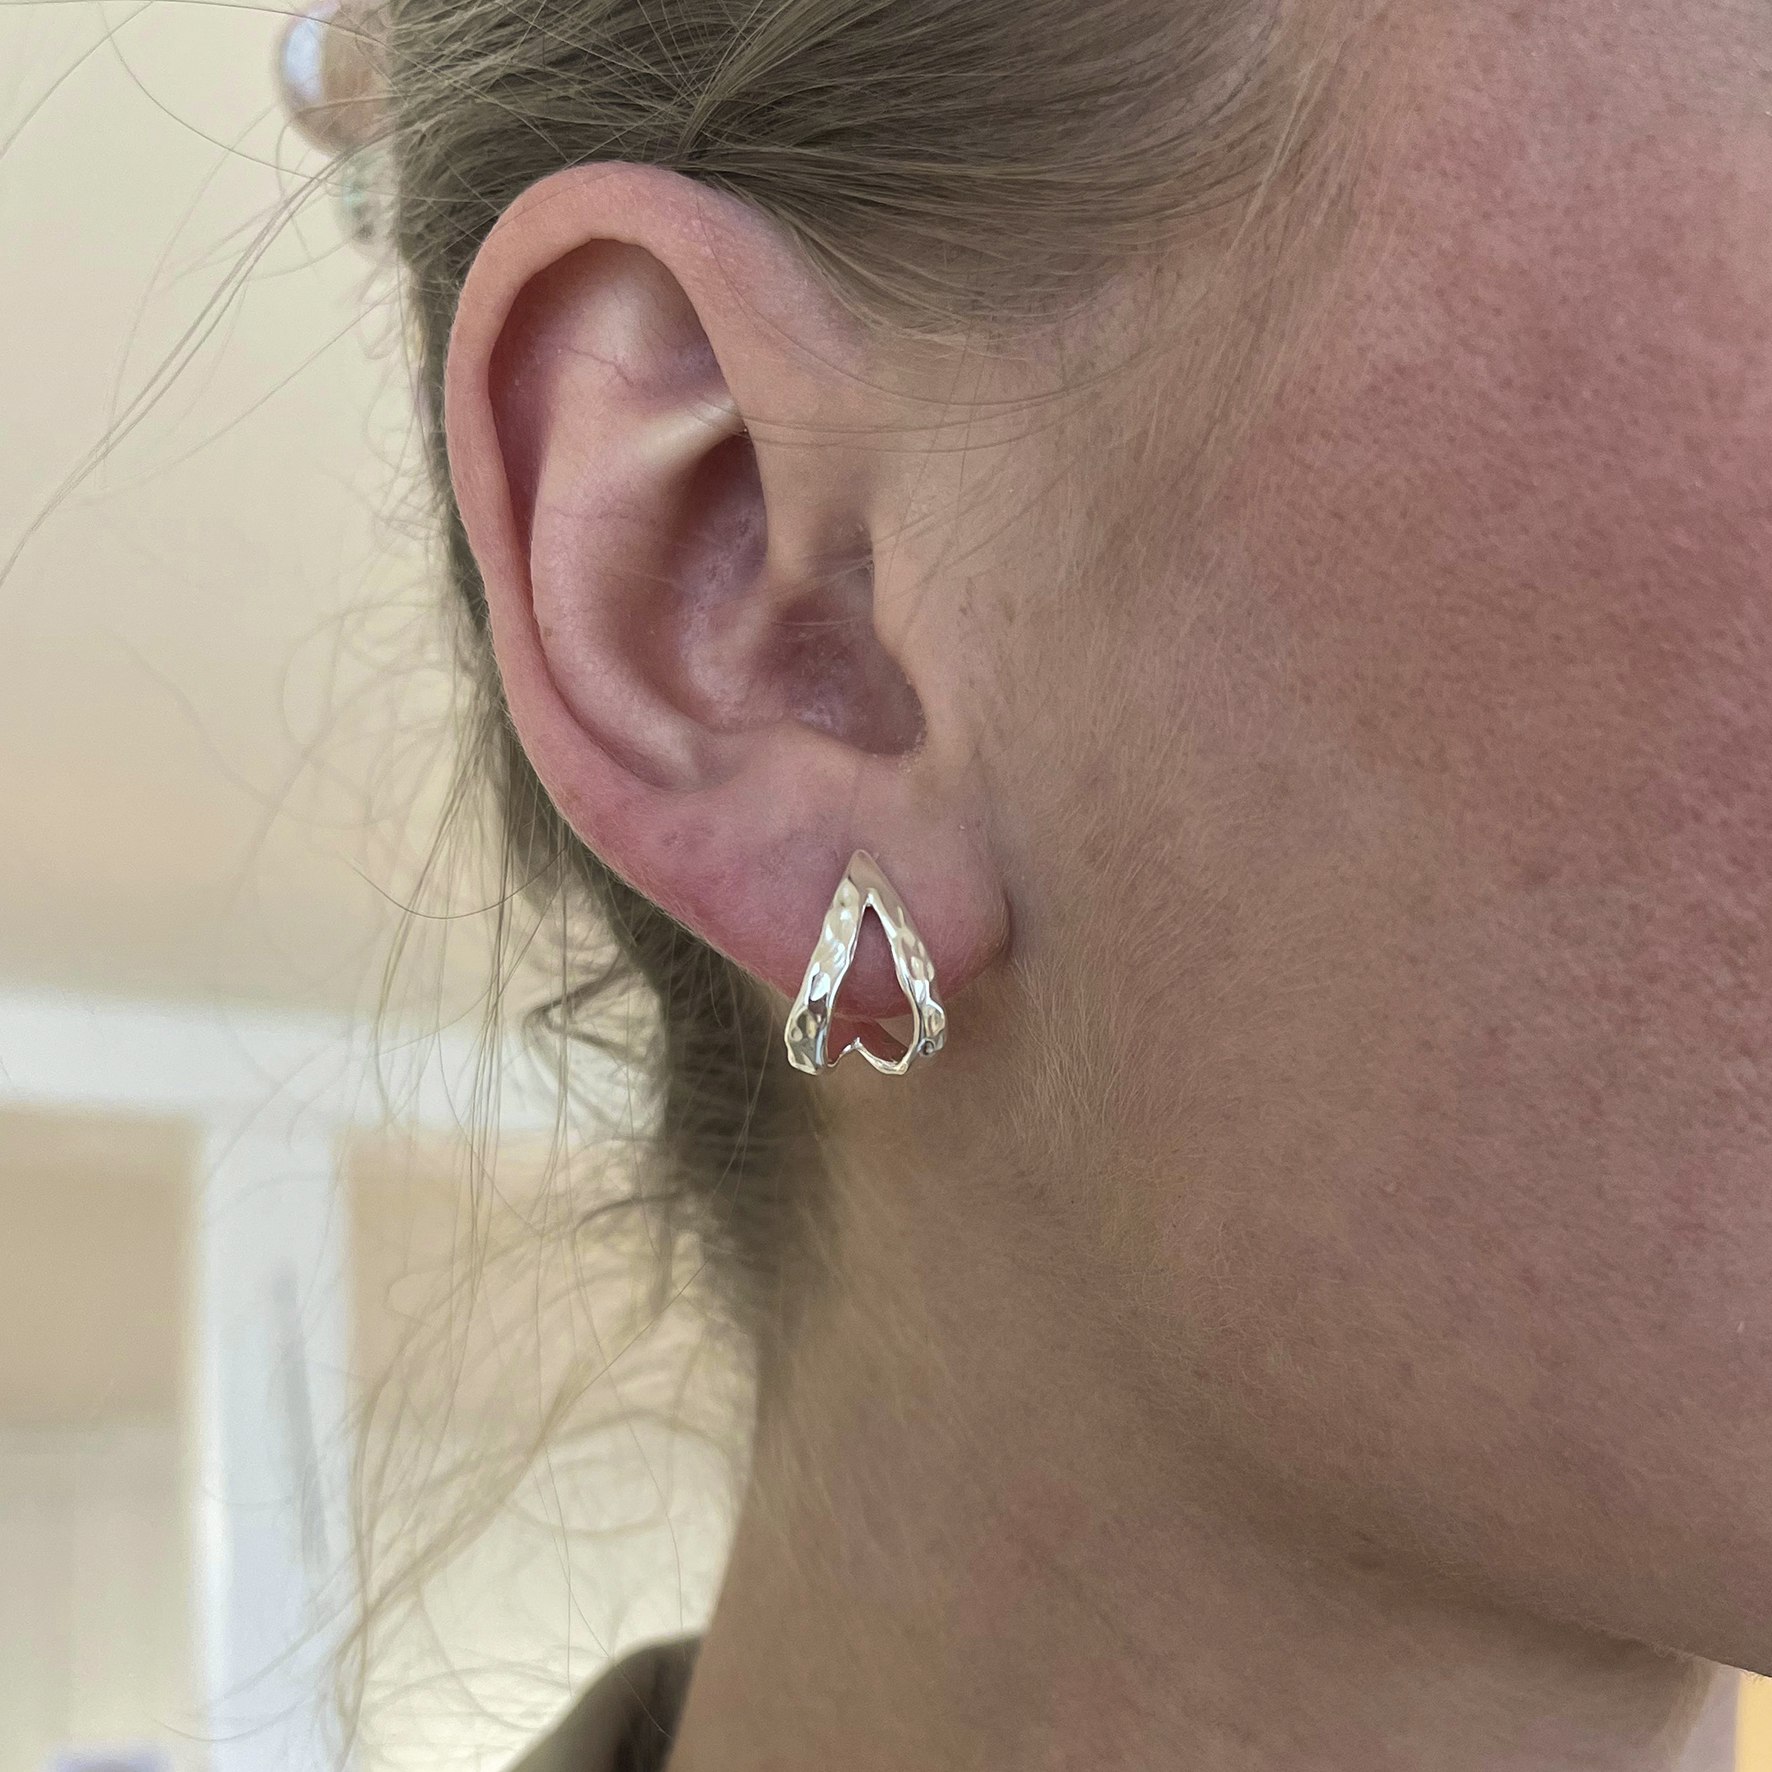 Breakup Earring from Jane Kønig in Goldplated Silver Sterling 925